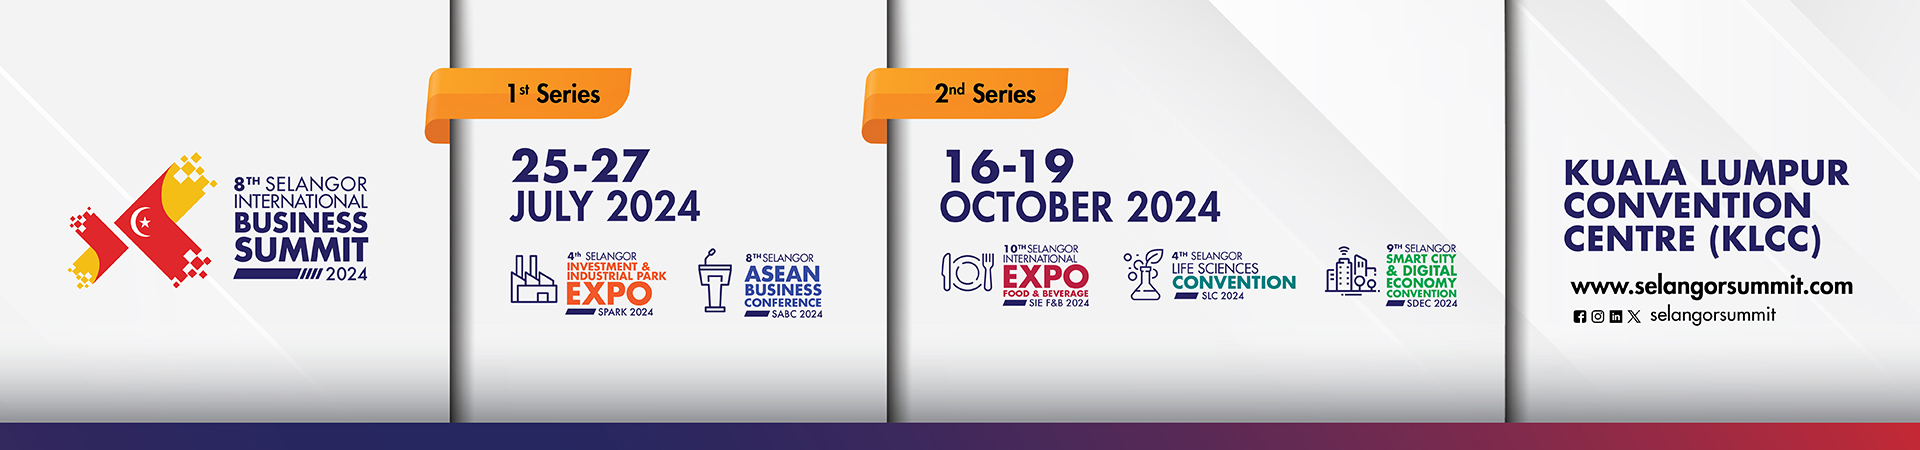 Promosi Selangor International Business Summit 202